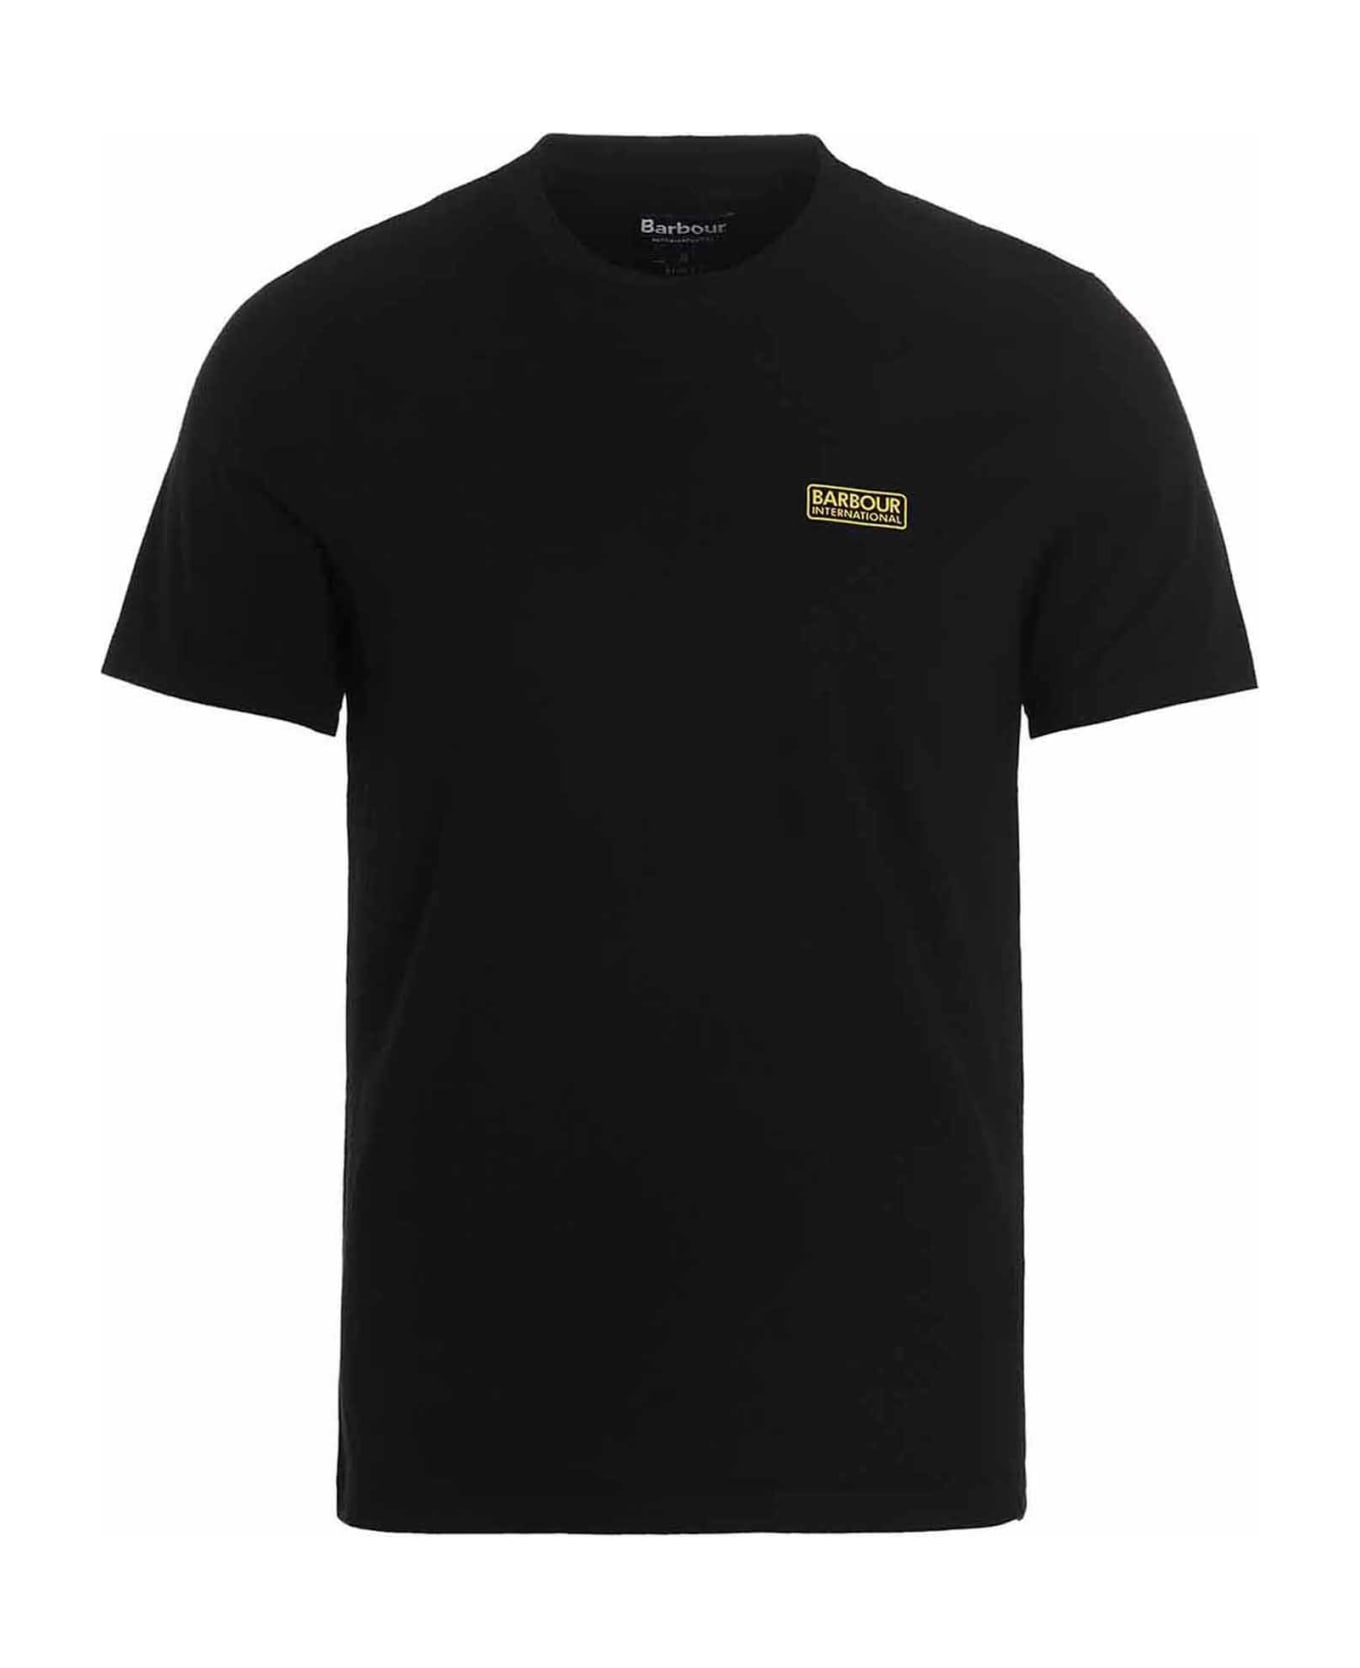 Barbour 'international T-shirt - Black/yellow シャツ